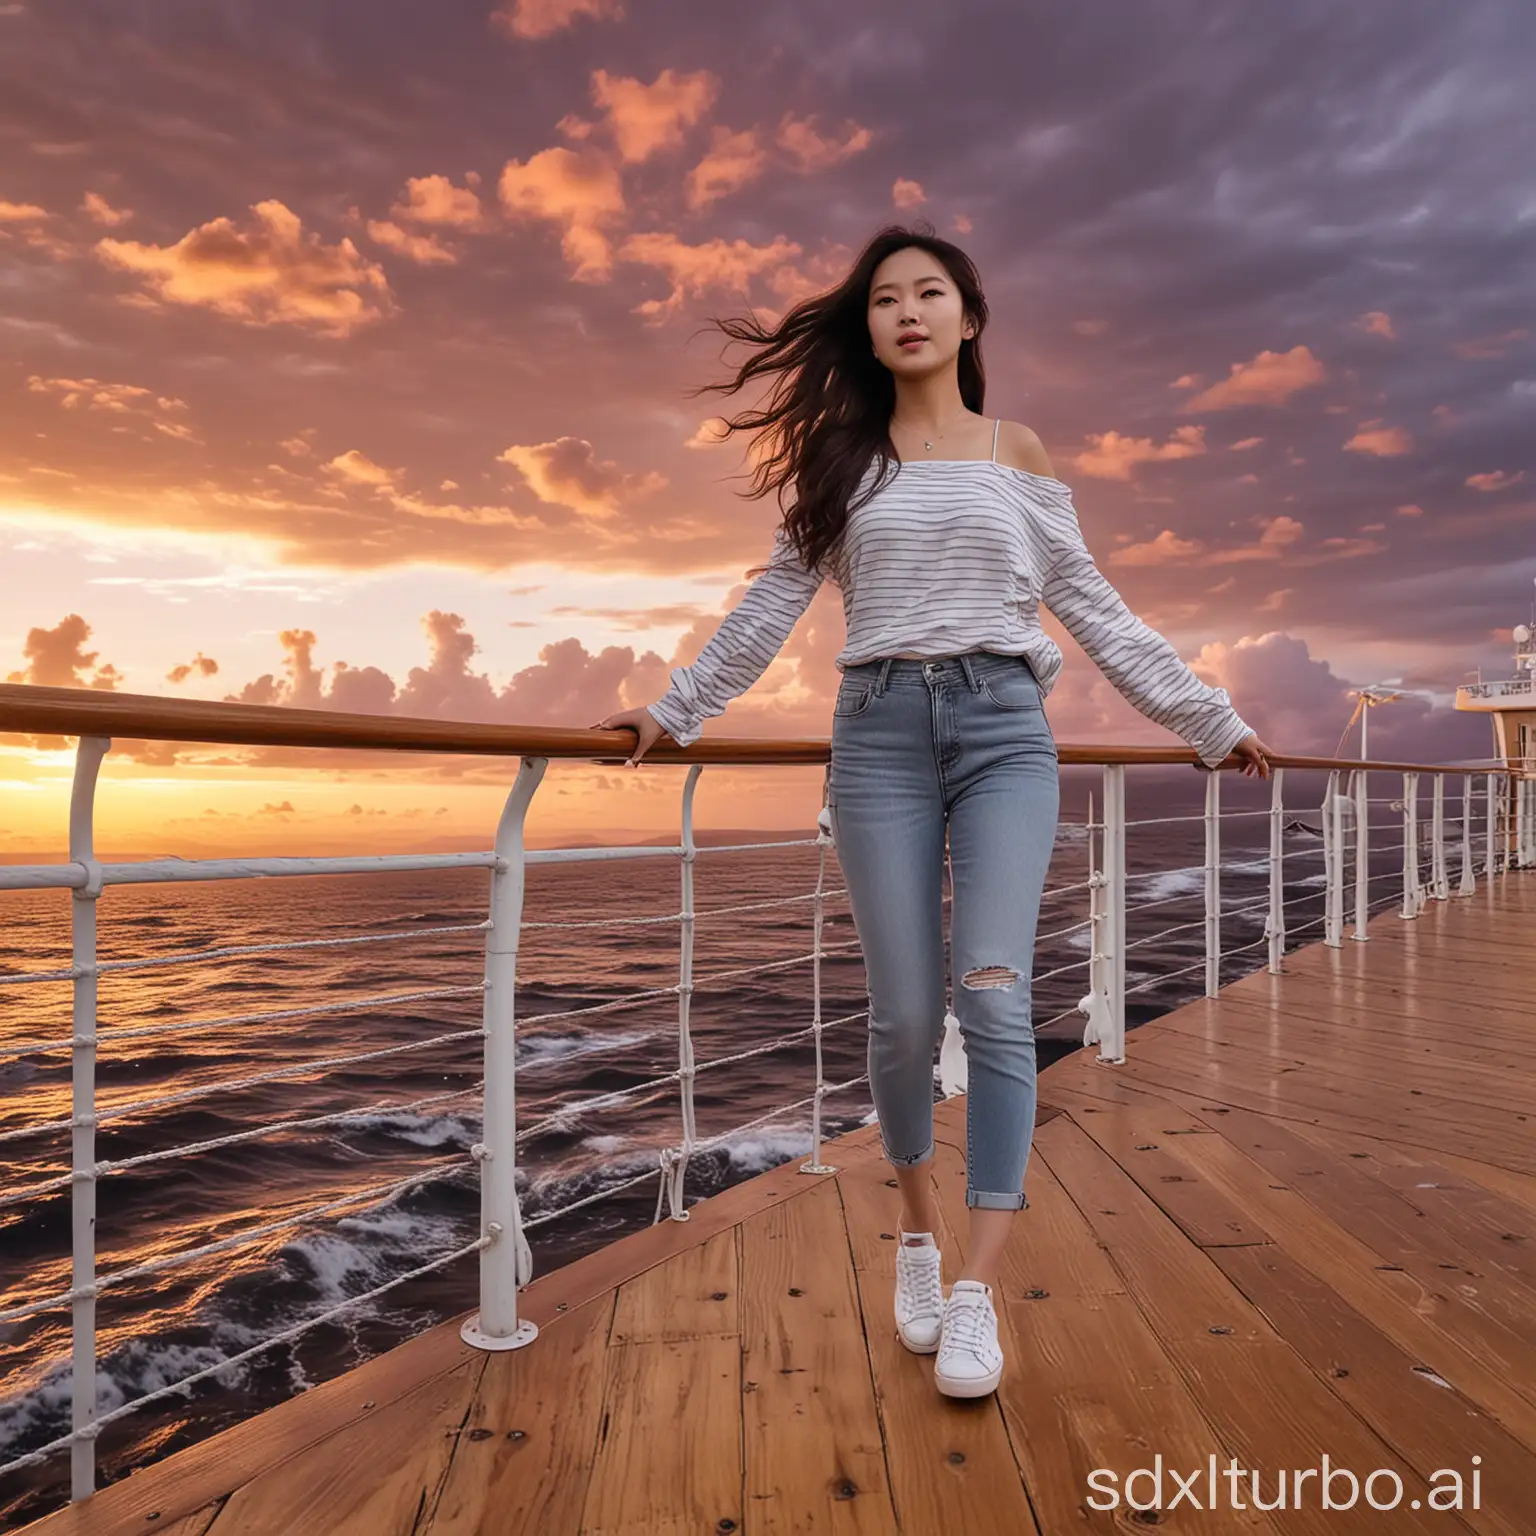 Beautiful-Korean-Woman-Standing-on-Ship-Deck-at-Sunset